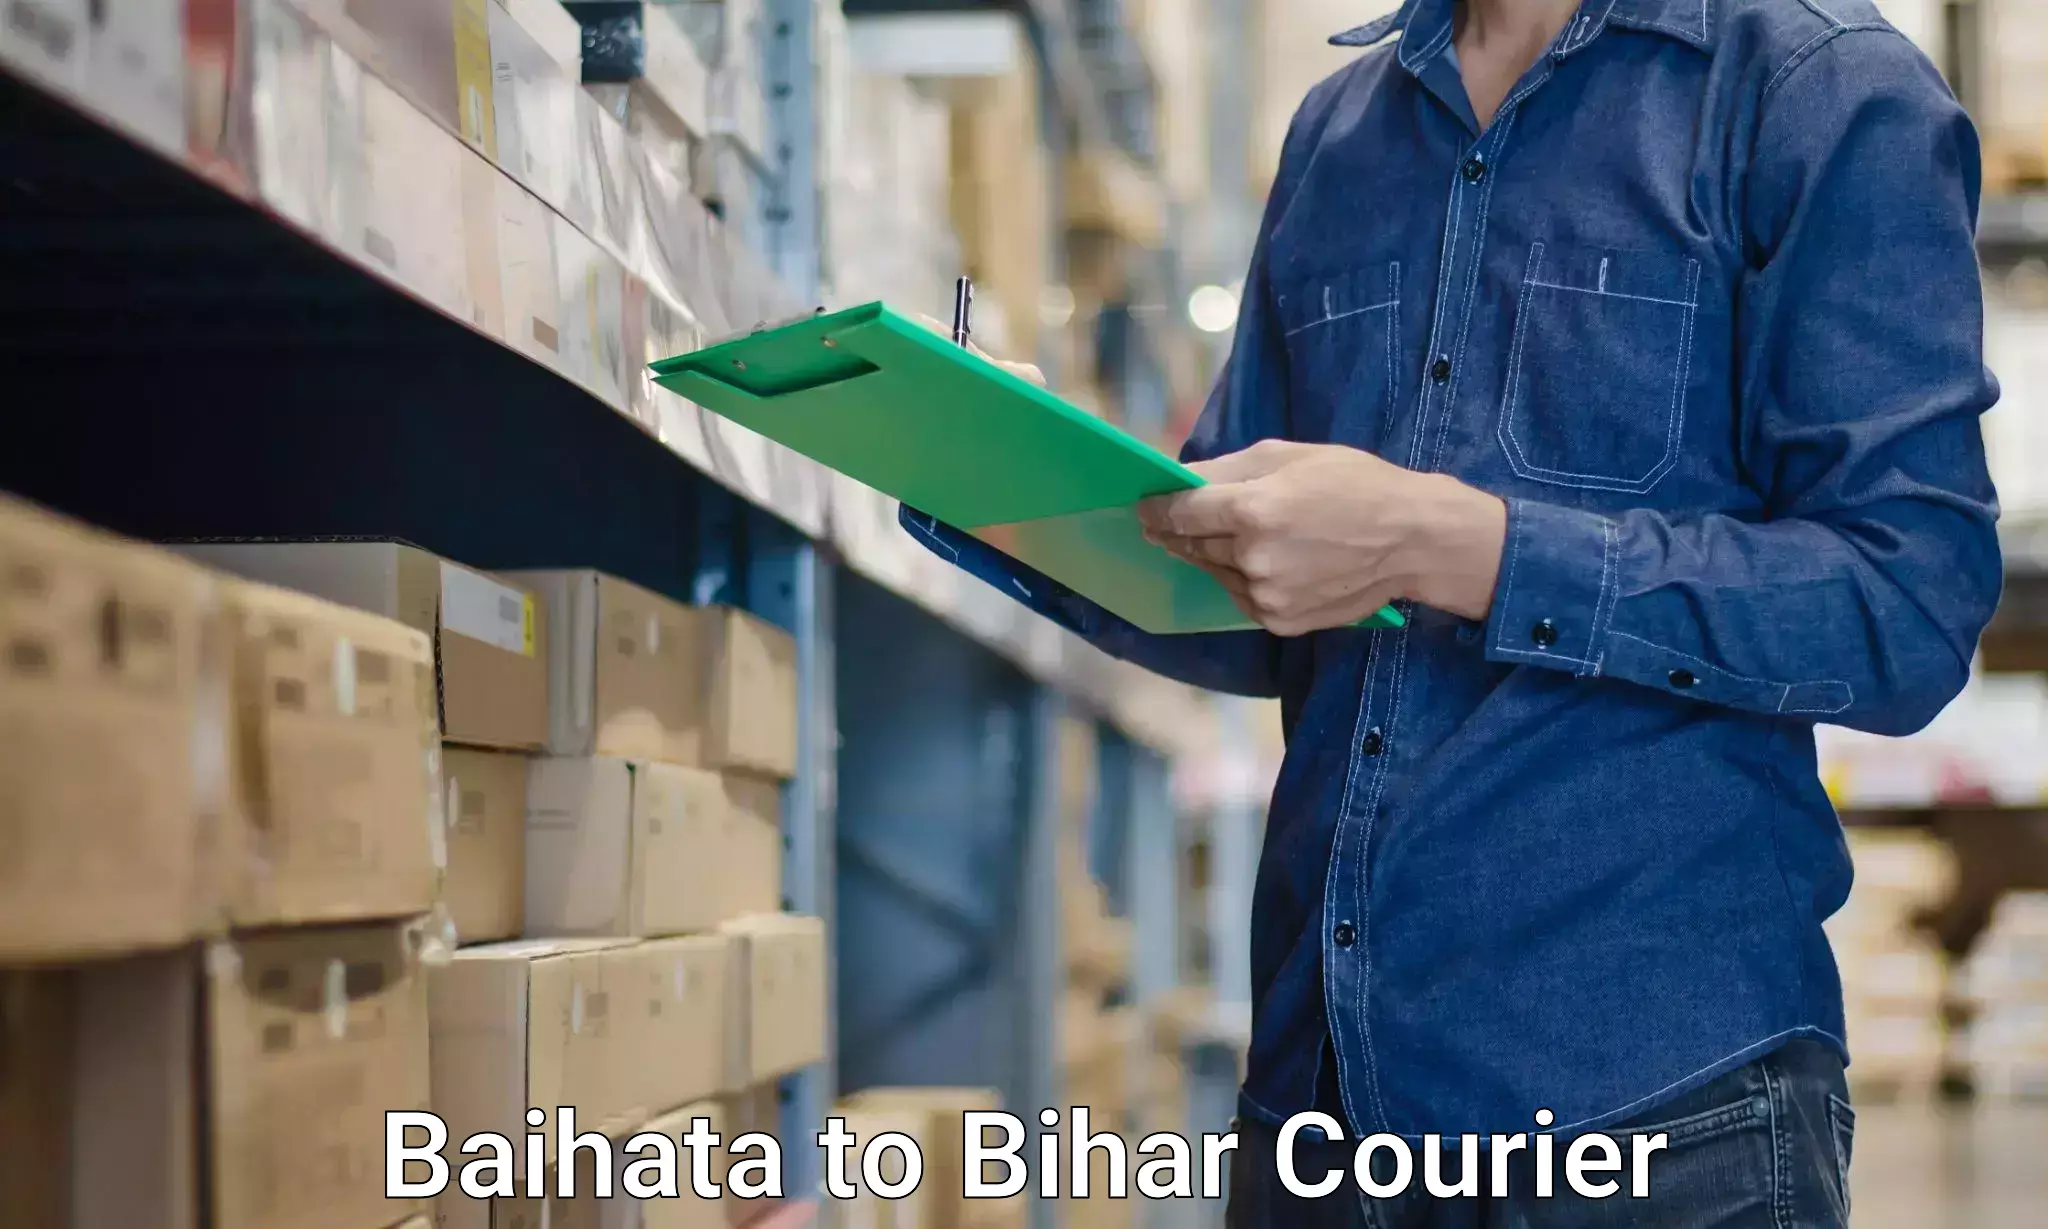 Furniture delivery service Baihata to Bihar